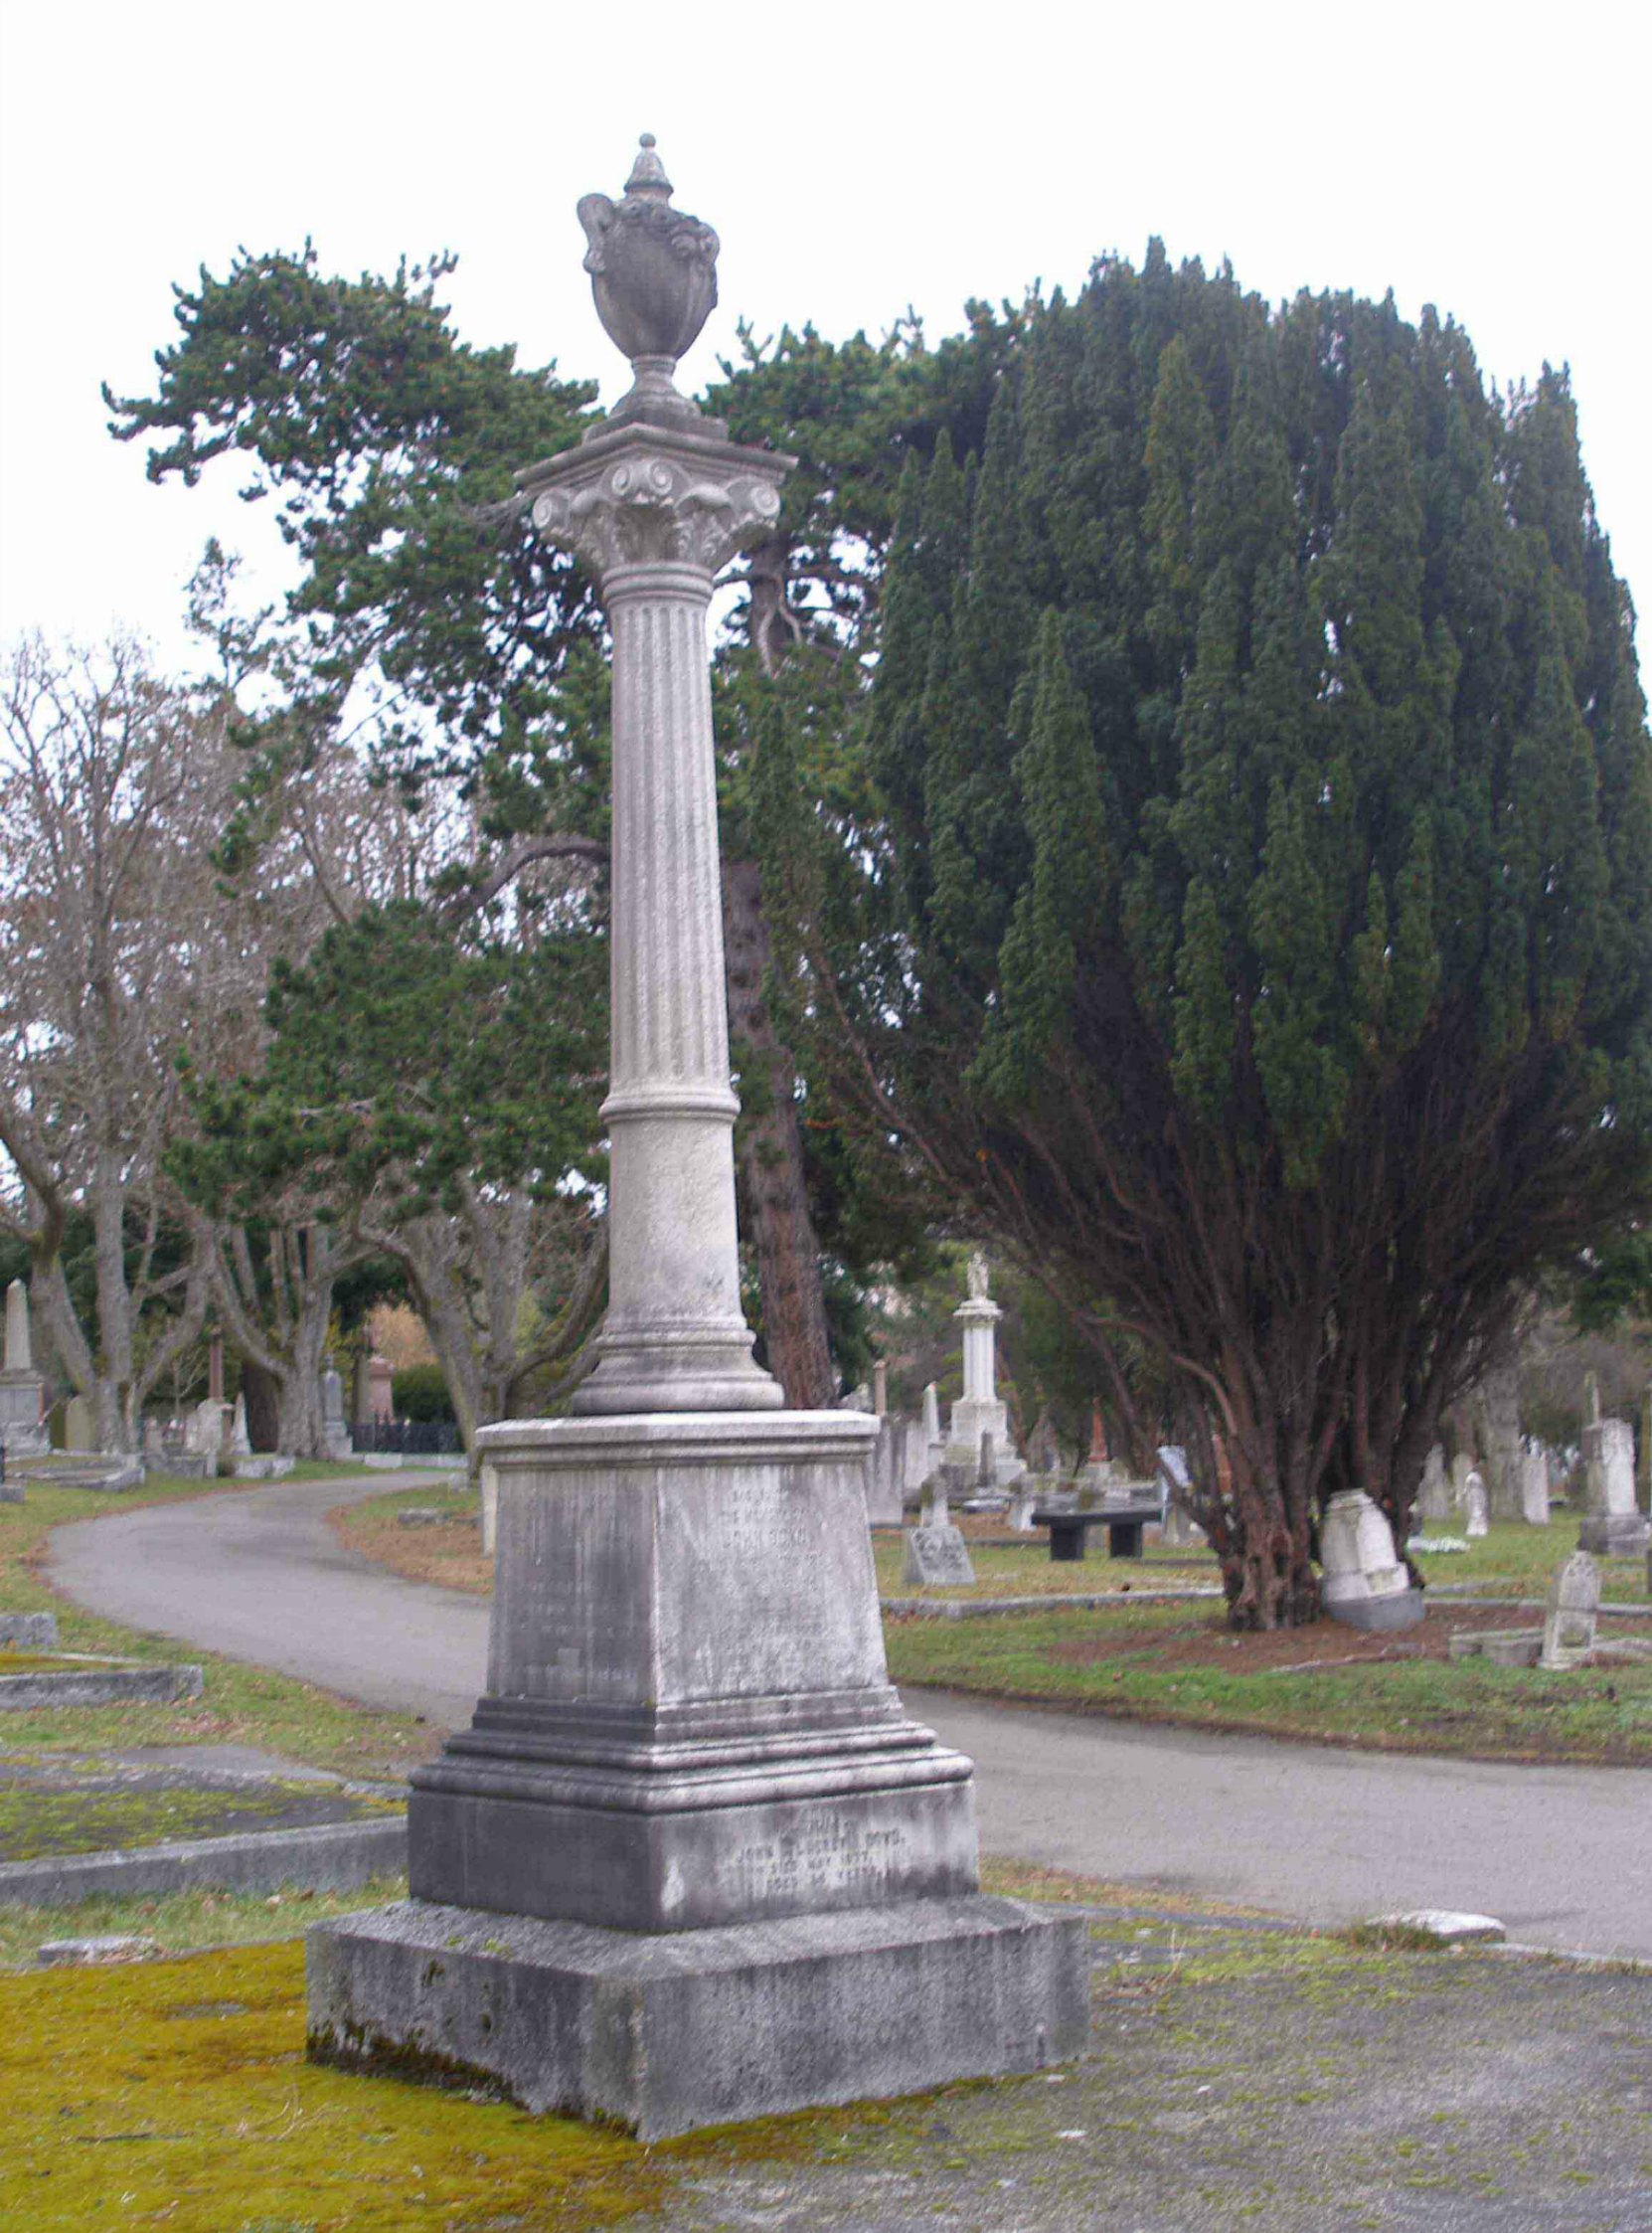 John Boyd grave marker, Ross Bay Cemetery, Victoria, B.C.